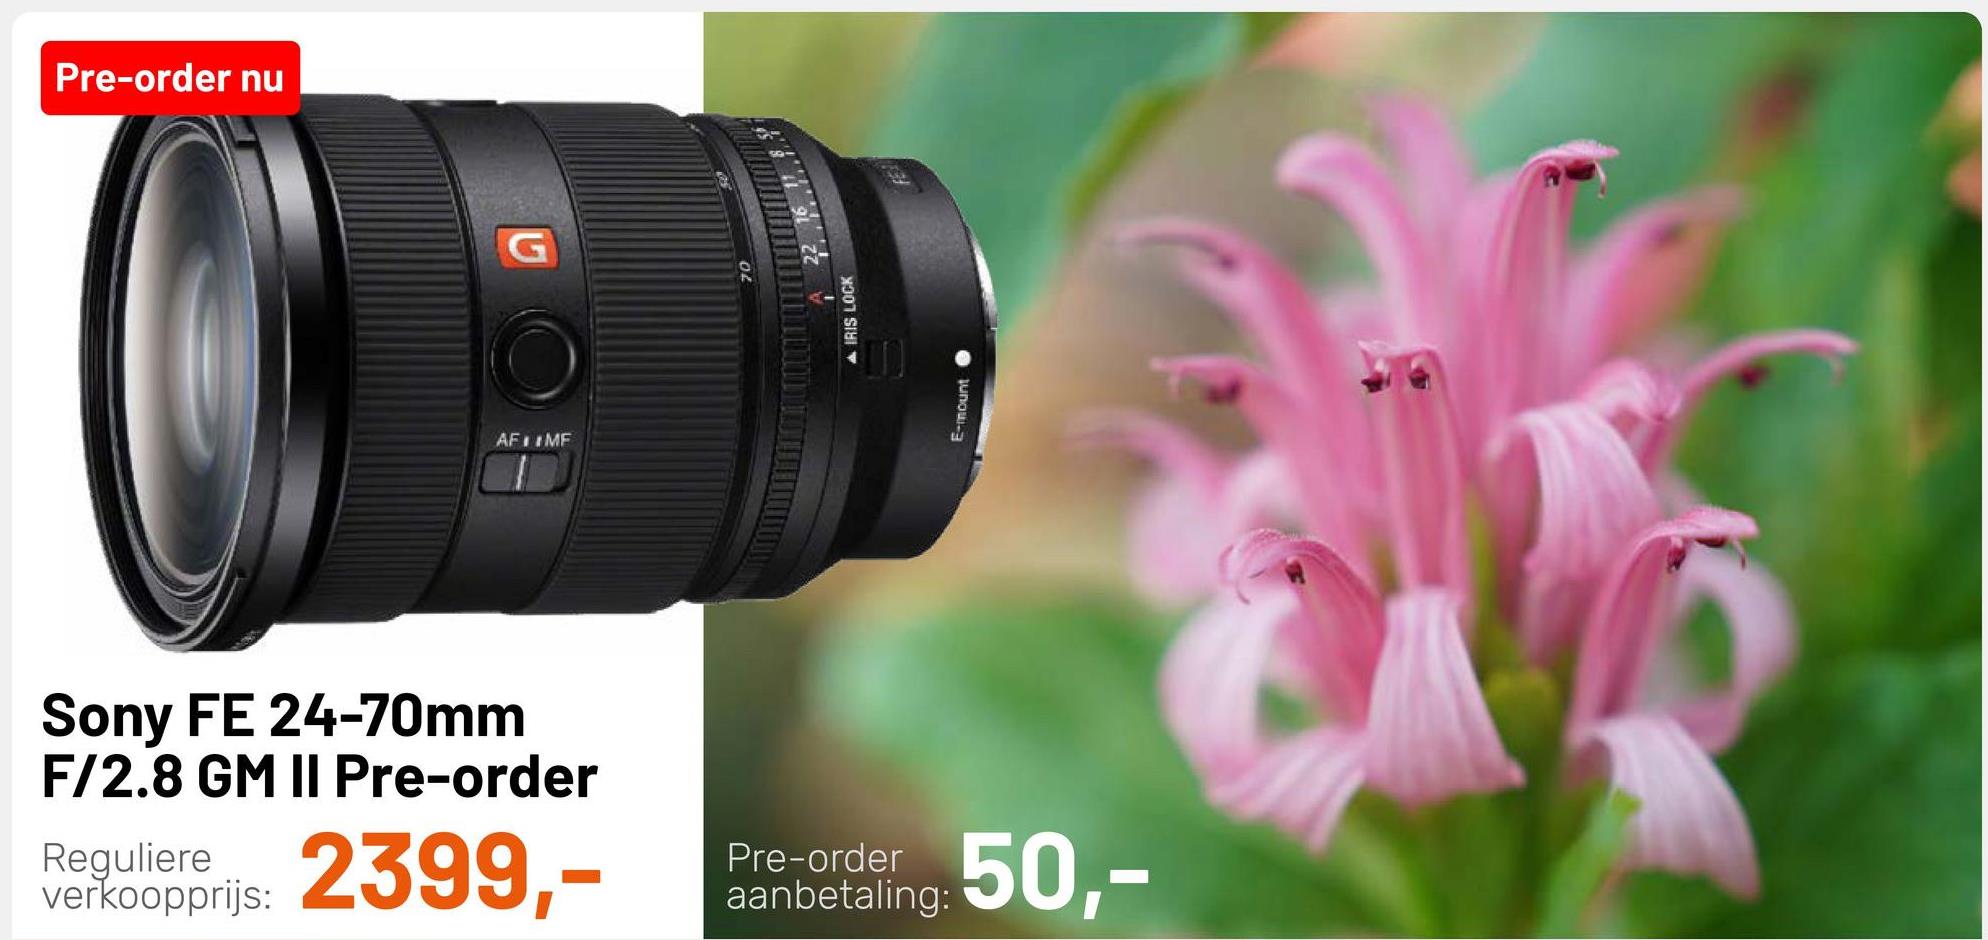 Pre-order nu
G
-mount
AF LIMF
Sony FE 24-70mm
F/2.8 GM II Pre-order
Reguliere
verkoopprijs:
2399,-
Pre-order
aanbetaling:
50,-
